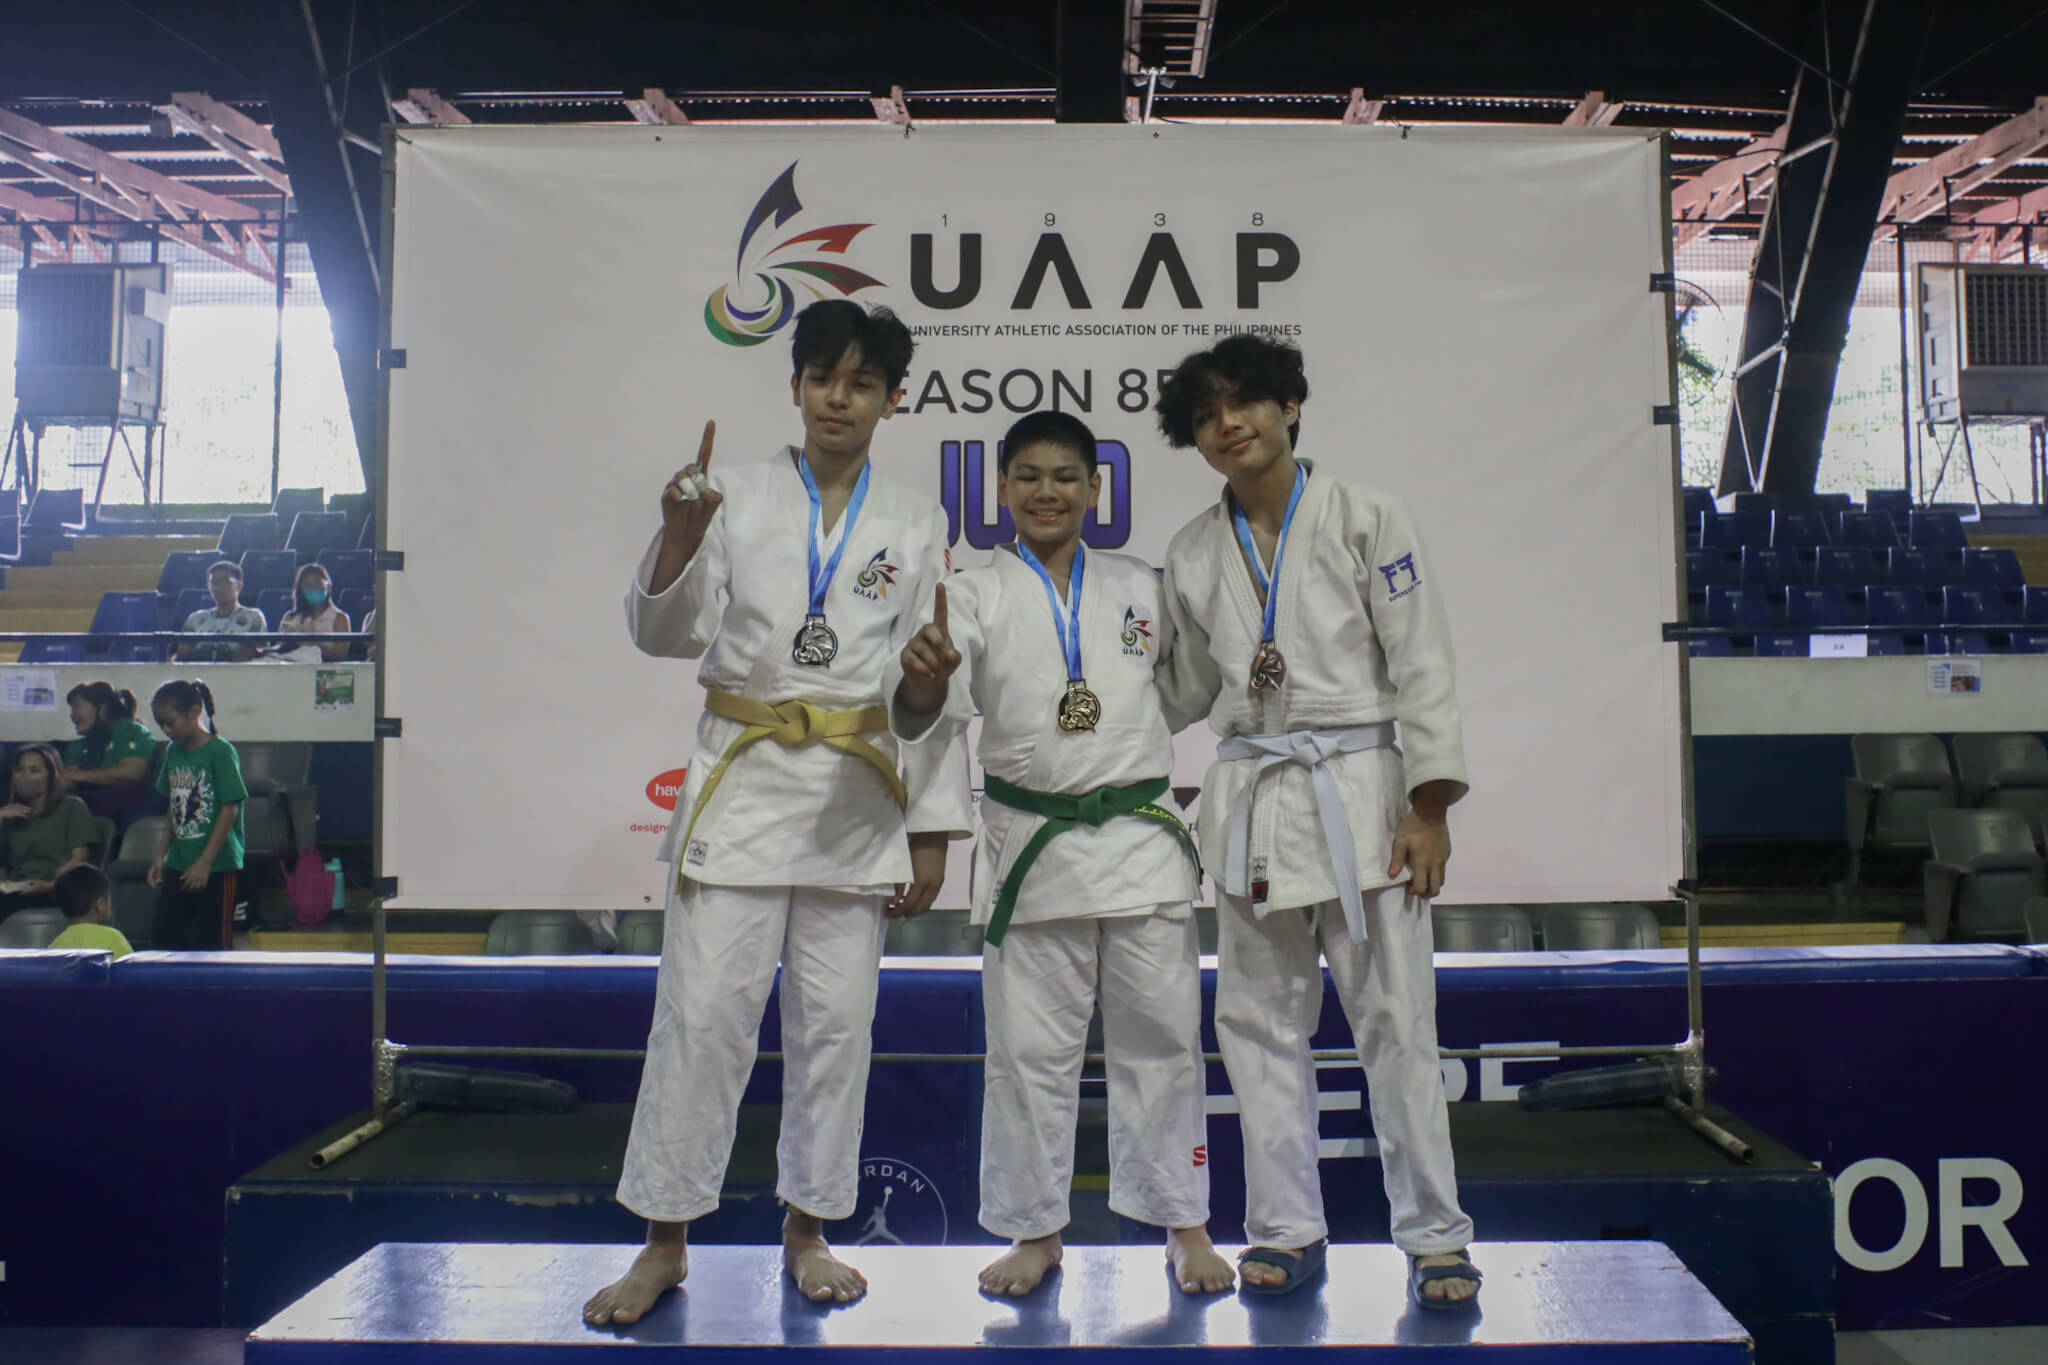 UAAP-85-Awarding-Boys-73kg-BabantoUST-CaguiclaUST-ThorADM UAAP 85 HSJD: UST boys, girls judokas dominate day 1 ADMU DLSU Judo News UAAP UE UP UST  - philippine sports news